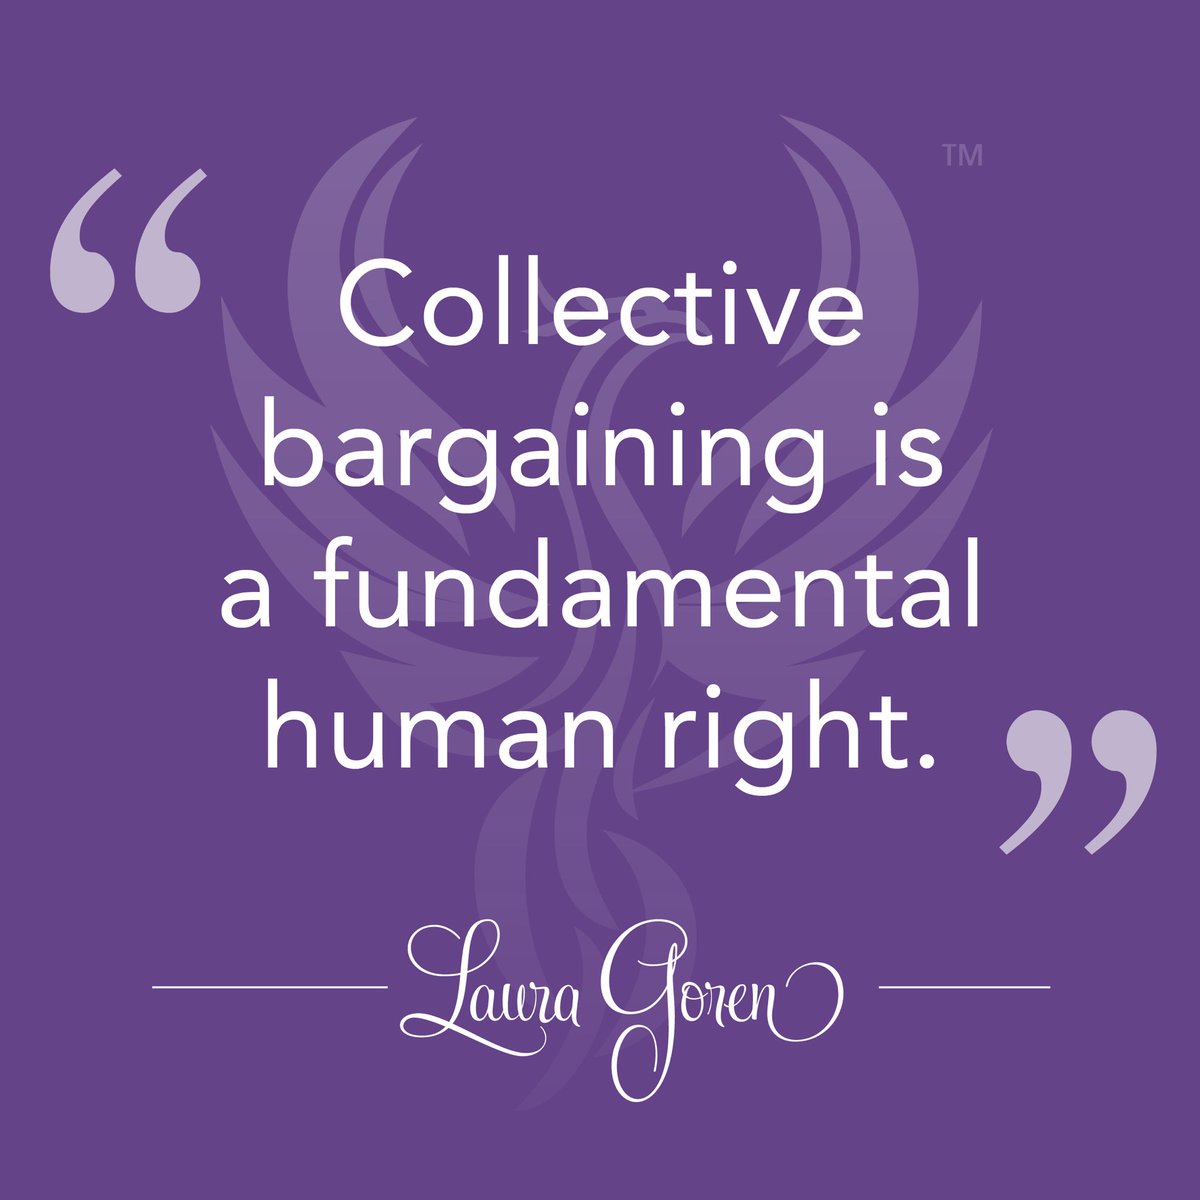 What Laura said. 💅🏾 

#UnionsForAll ✊🏽✊🏻✊🏿✊🏼✊🏾 #ASeatAtTheTable #CollectiveBargainingNOW #VAisForUnions